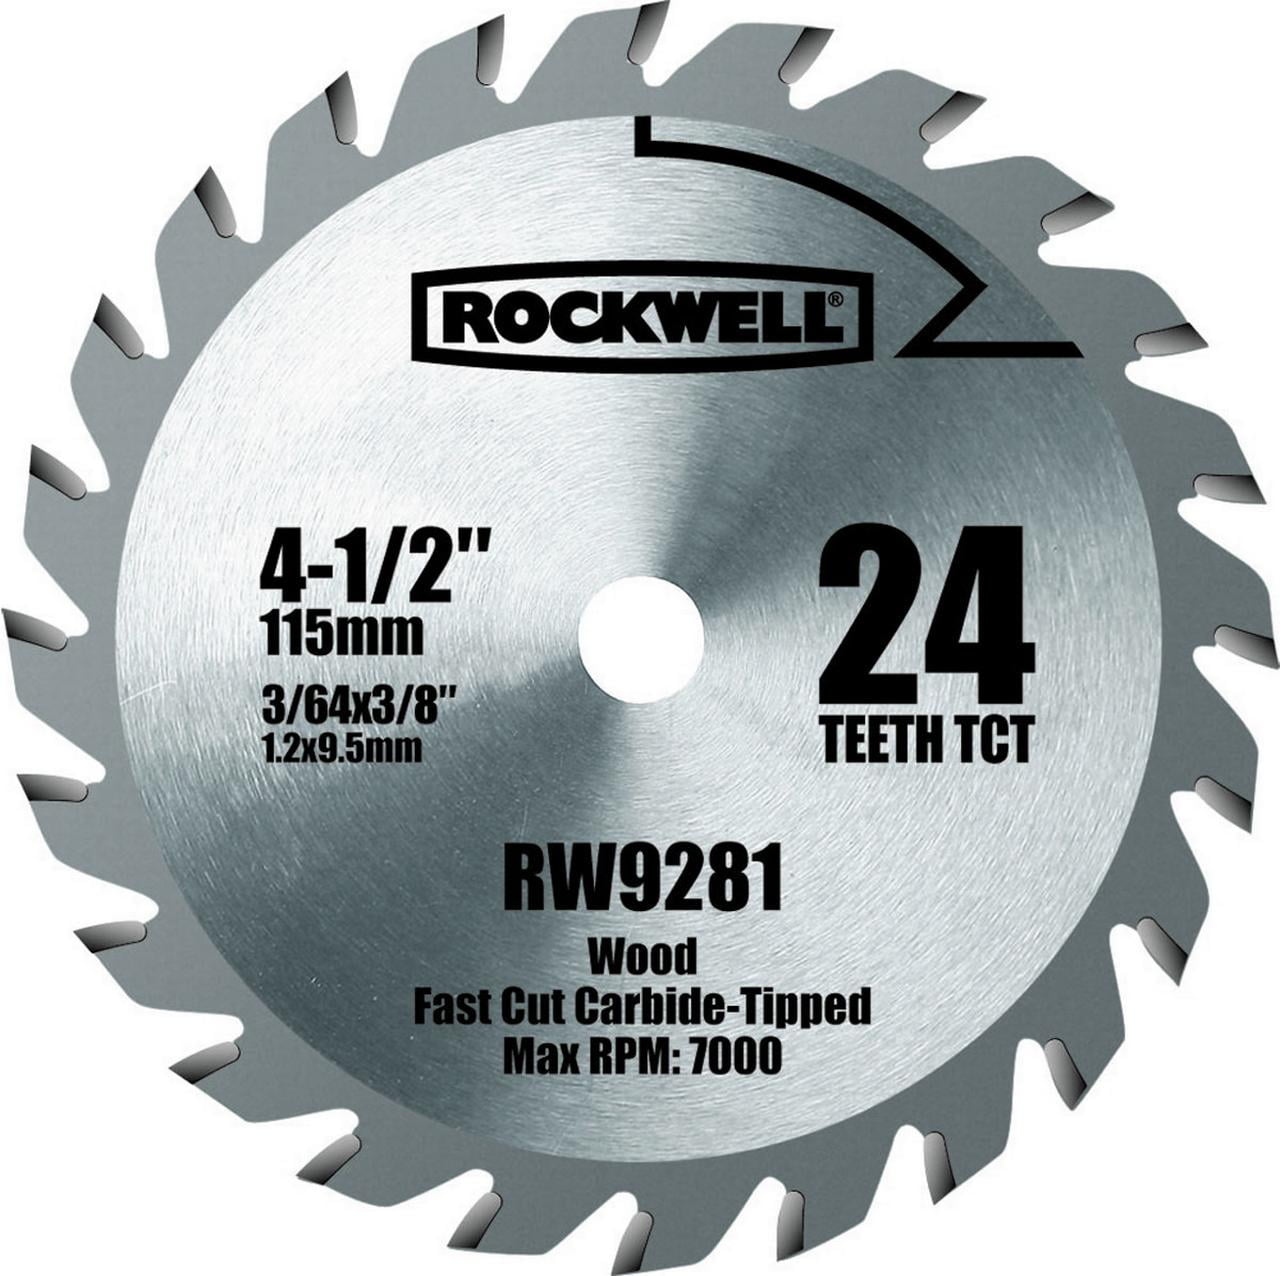 Rockwell Sonicrafter 1 5/8" Cutting Depth Metal E-Cut Saw Blade Set 6 pk RW8981K 